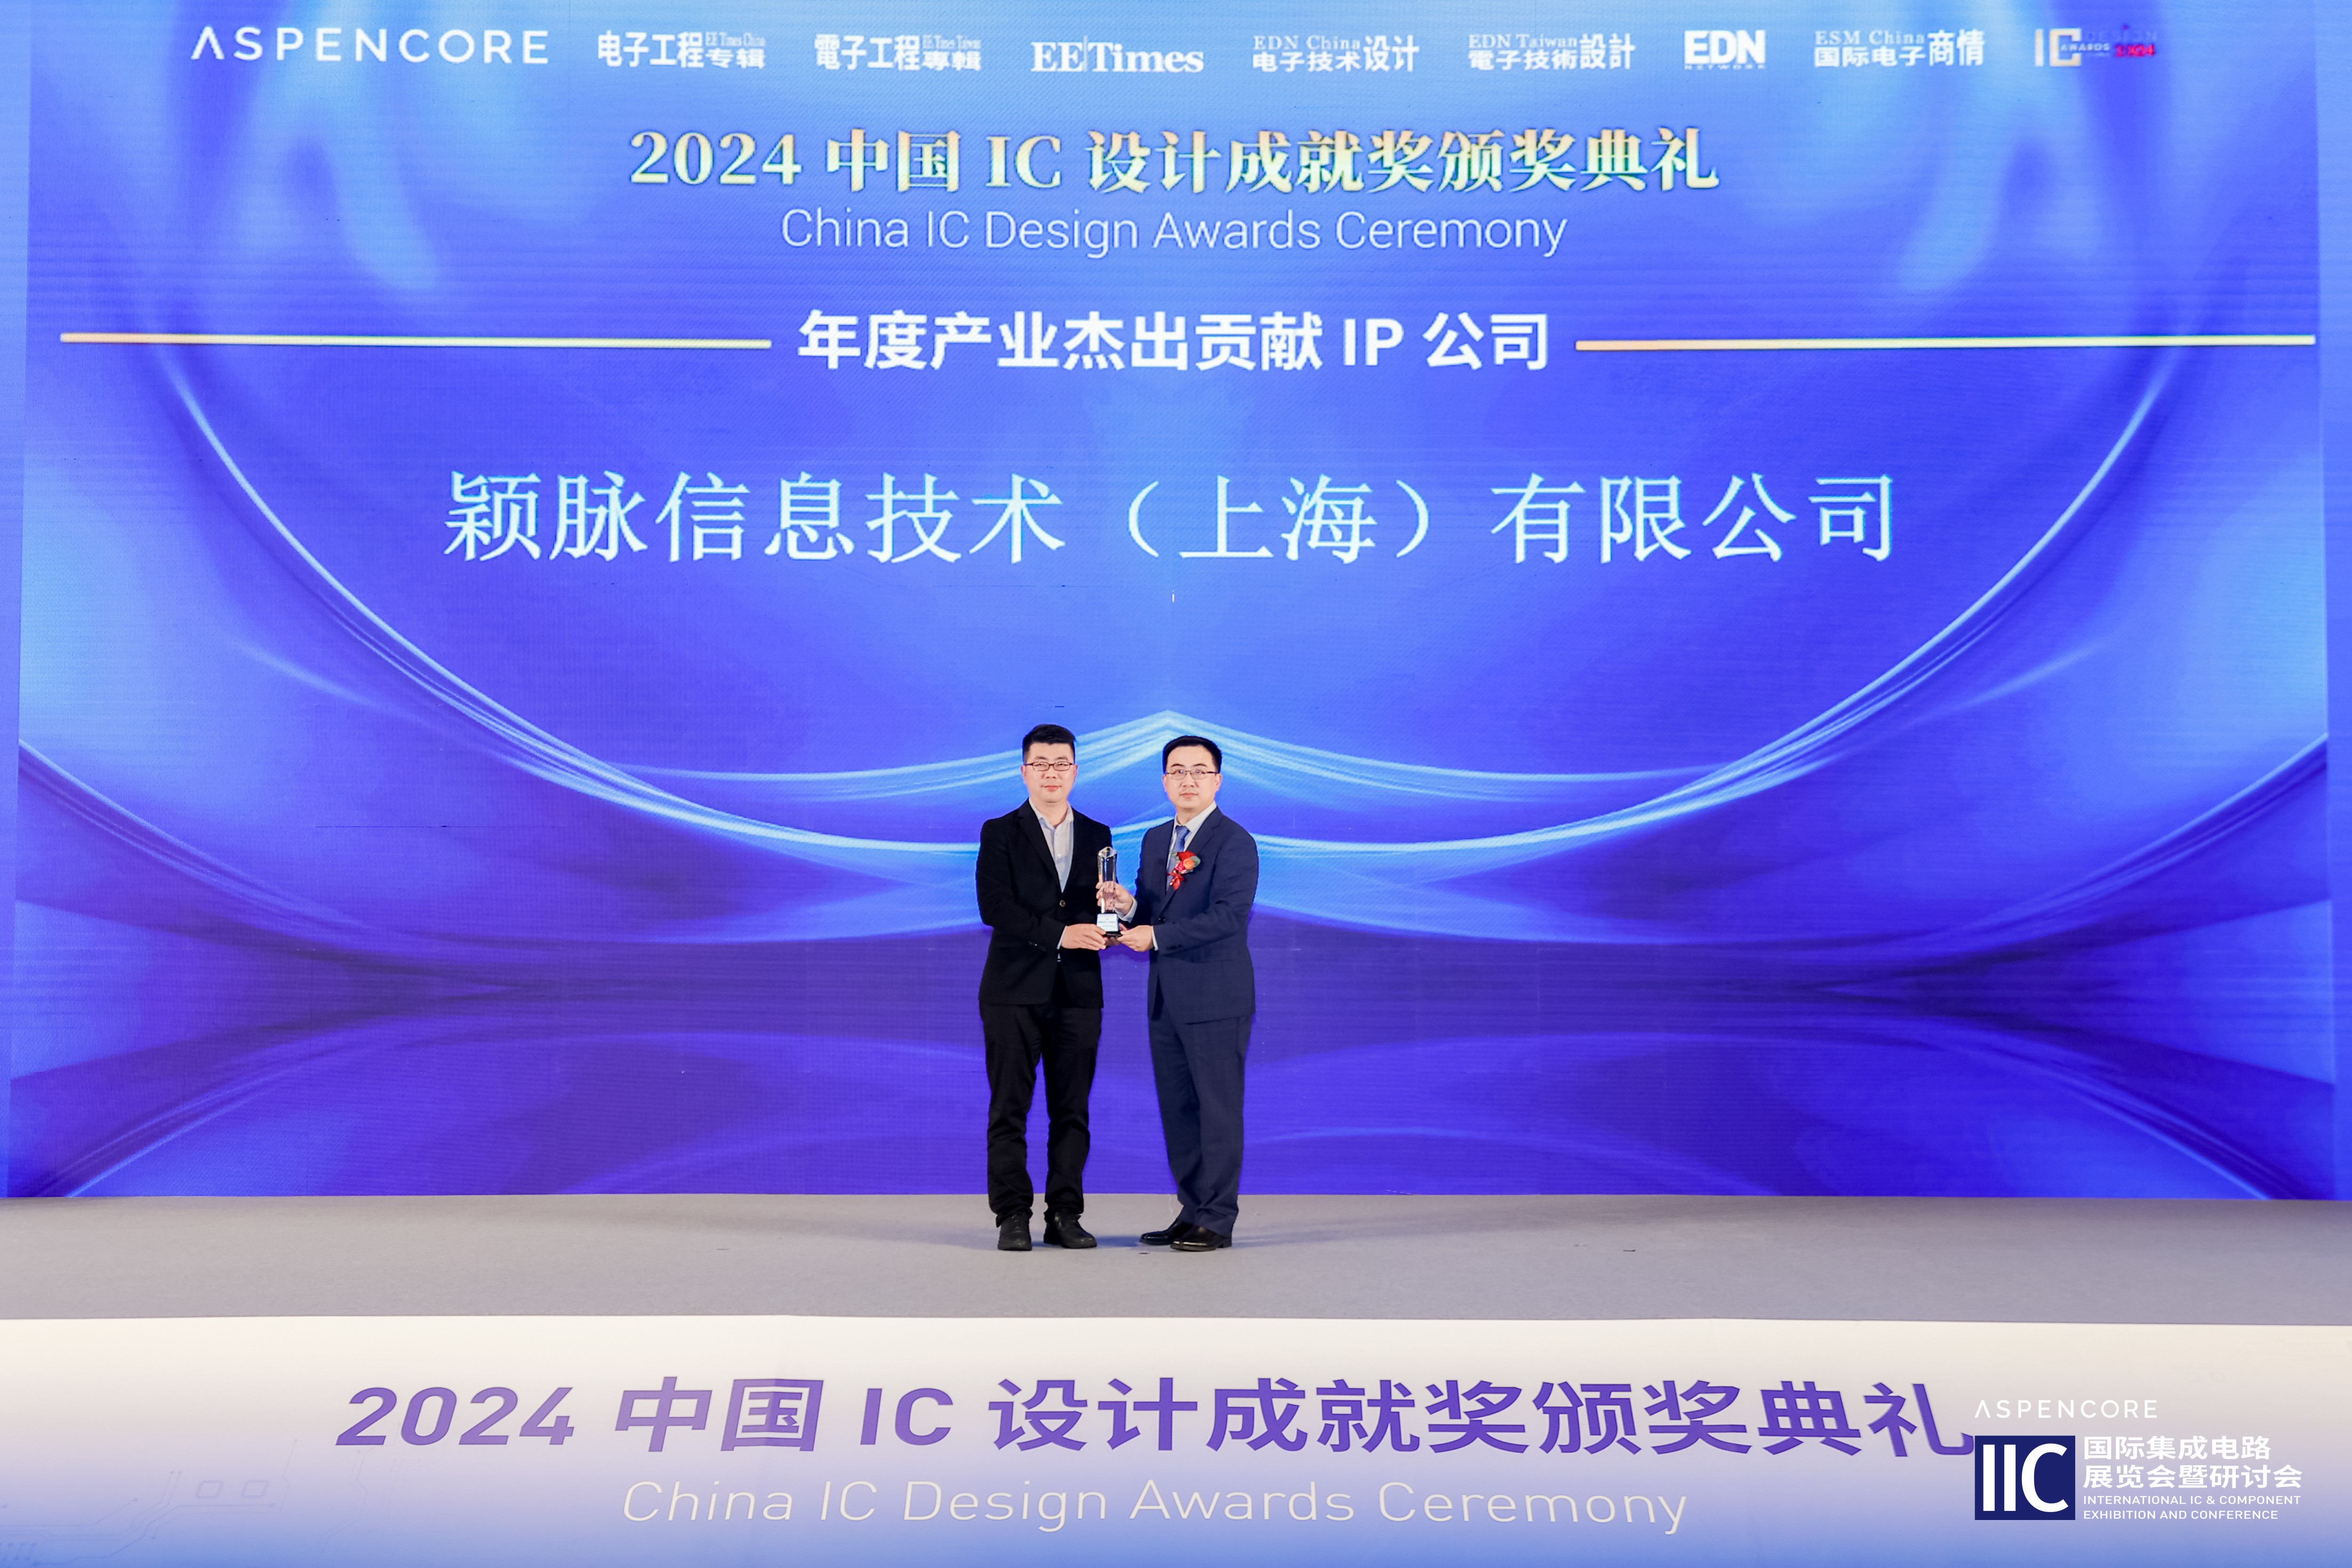 Imagination荣获2024中国IC设计成就奖“年度产业杰出贡献IP公司”